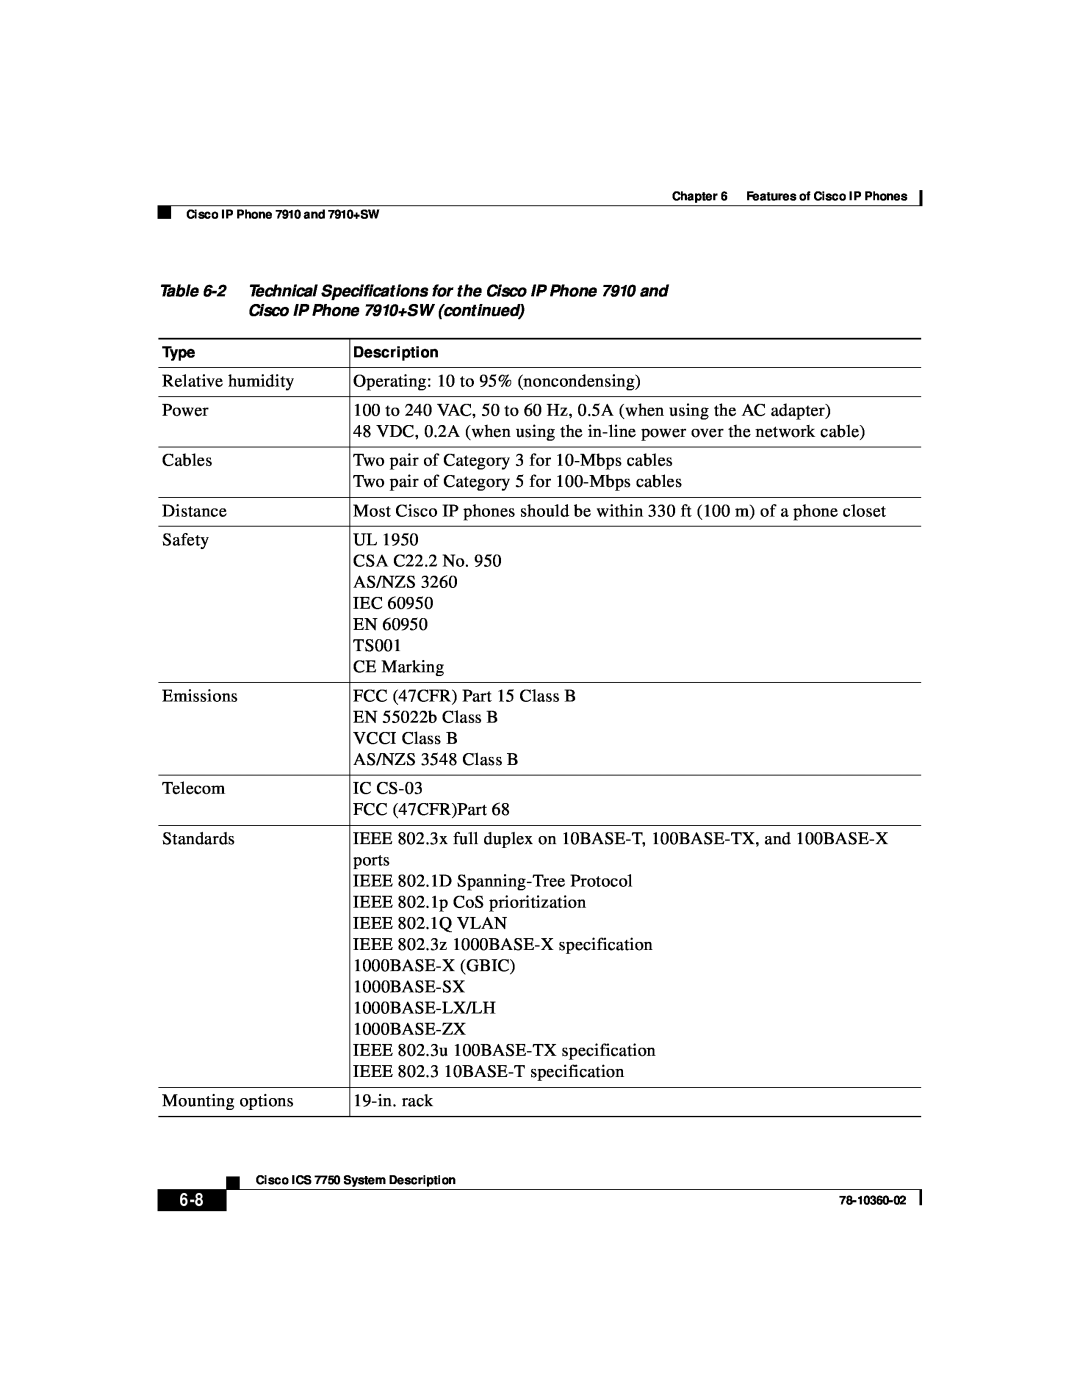 Cisco Systems ICS-7750 manual Type, Description 